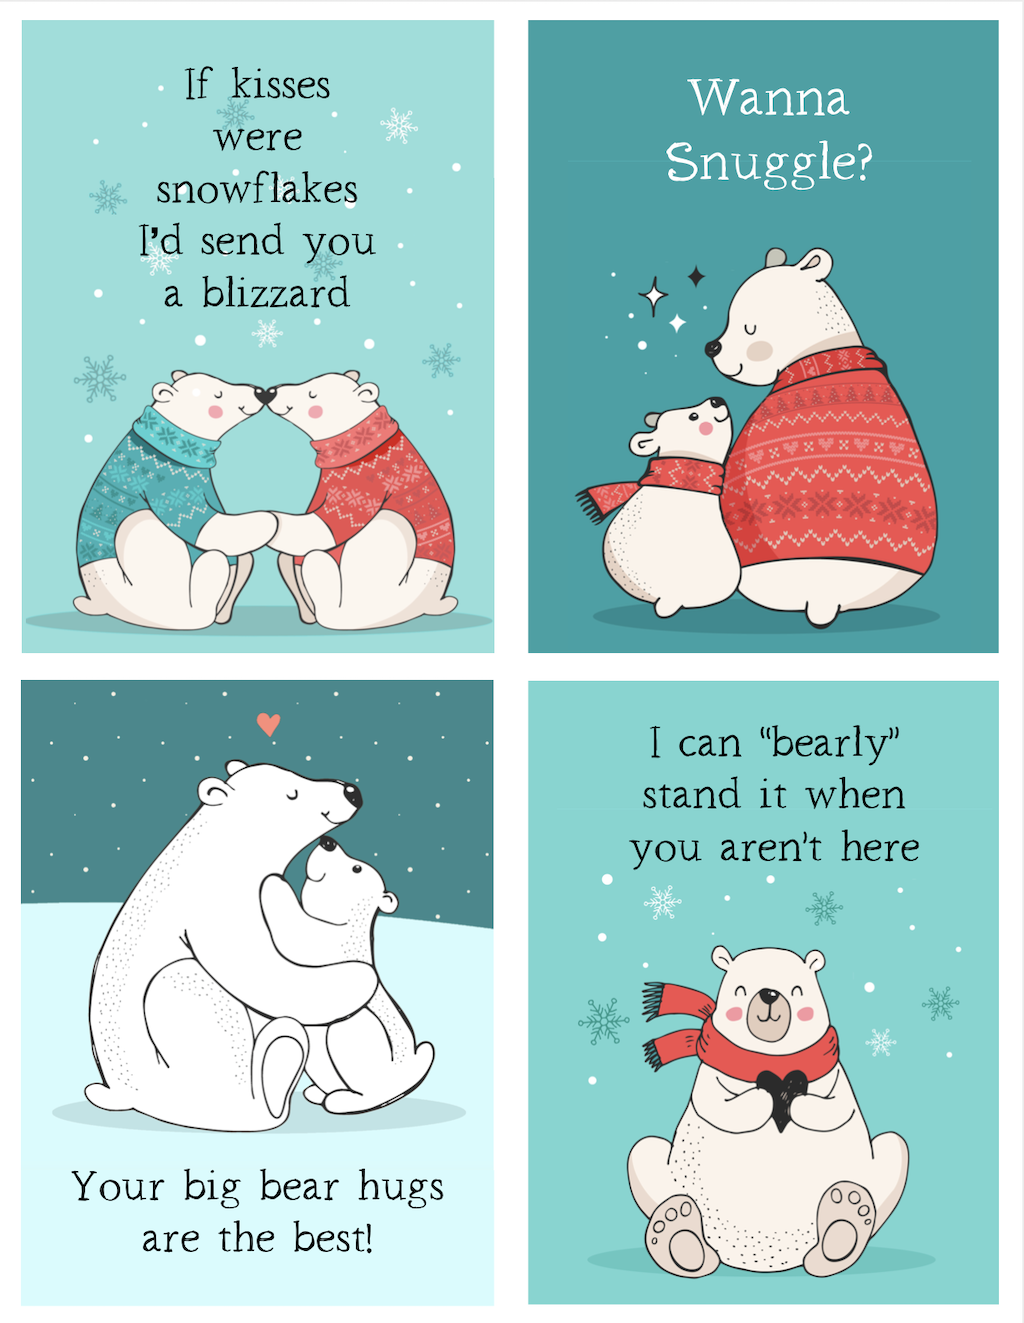 Be My Snowy Valentine Cards